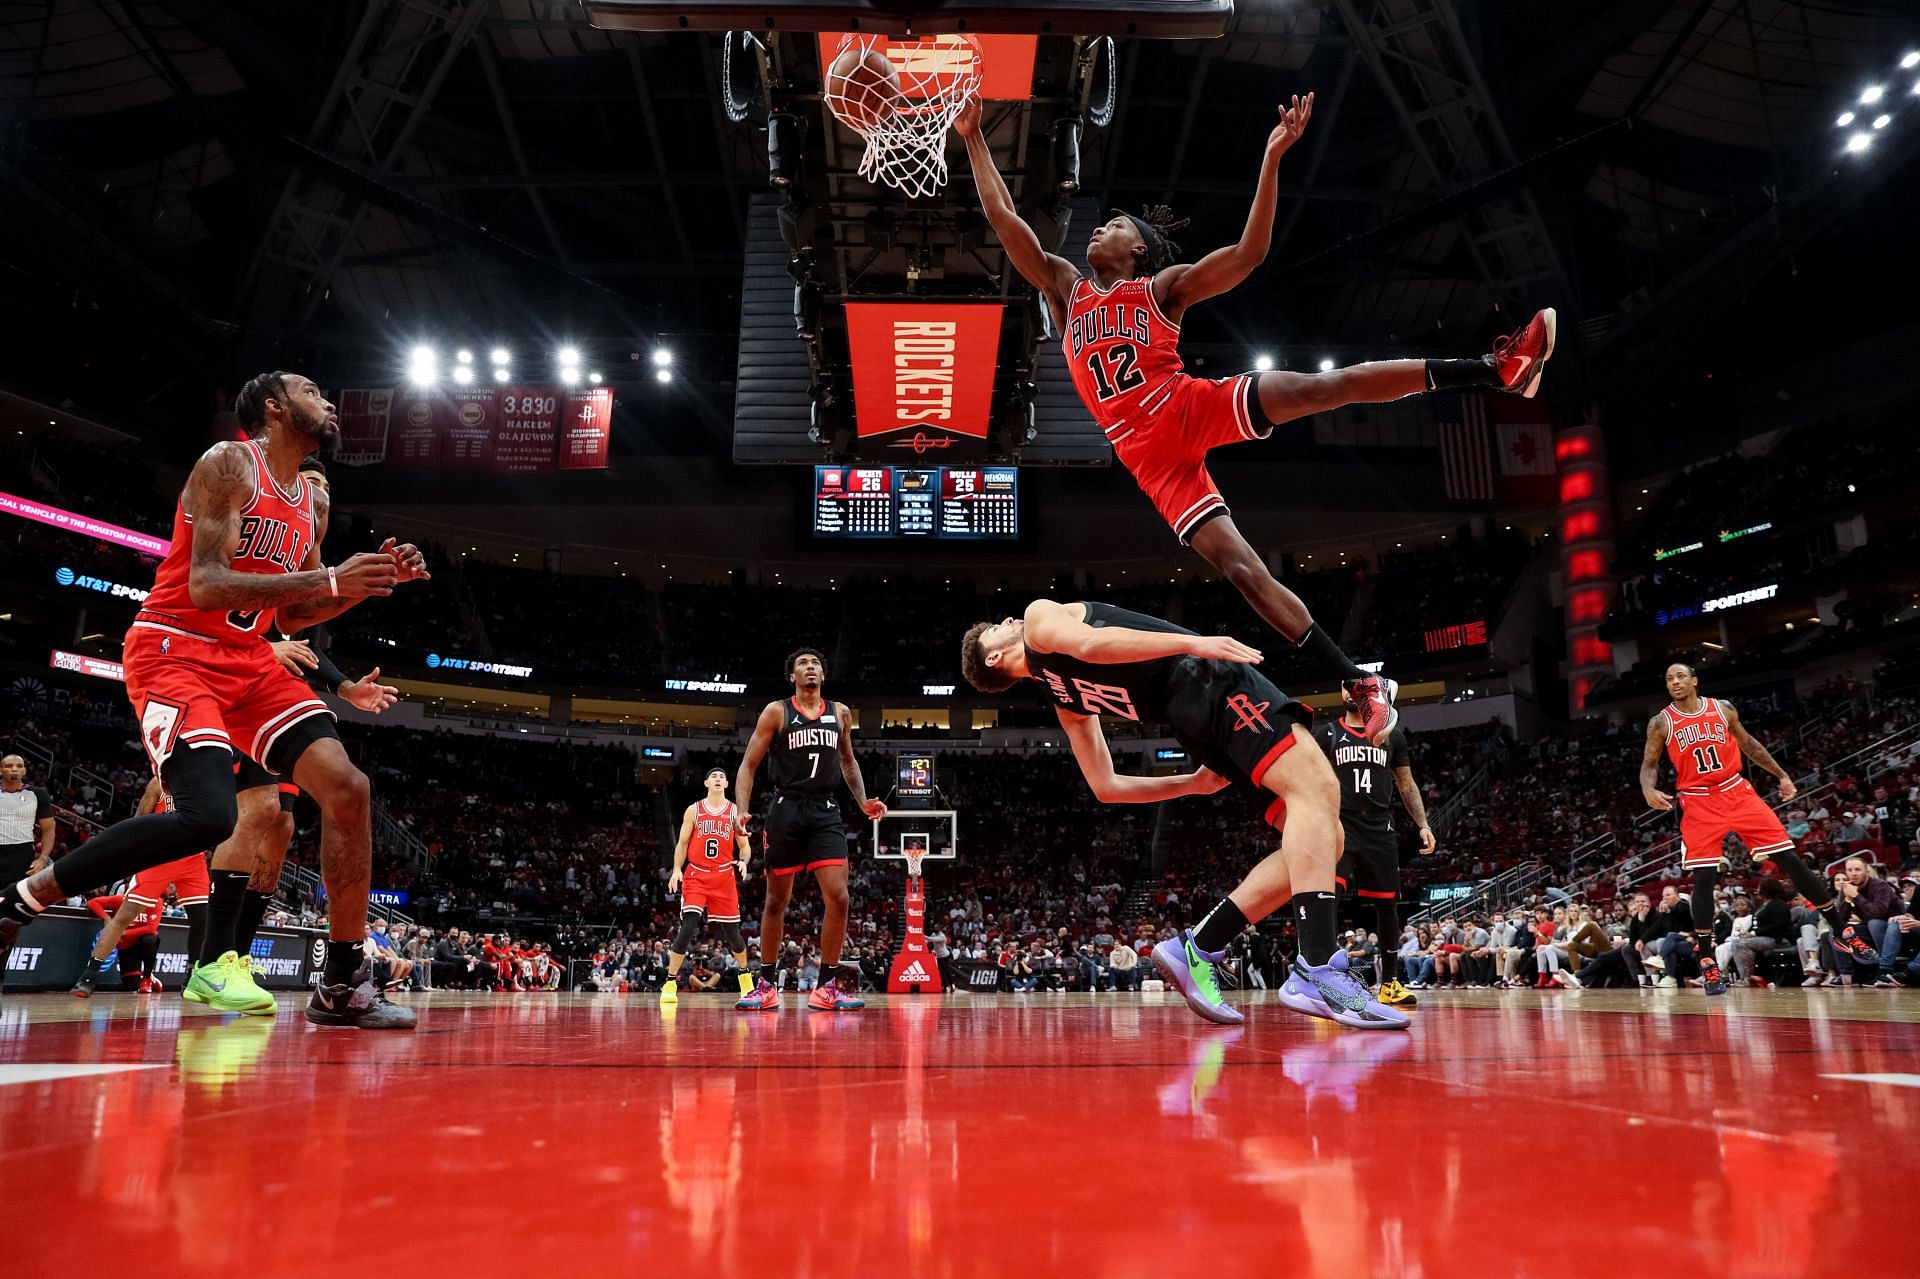 Ayo Dosunmu finishes a dunk at the Chicago Bulls v Houston Rockets game